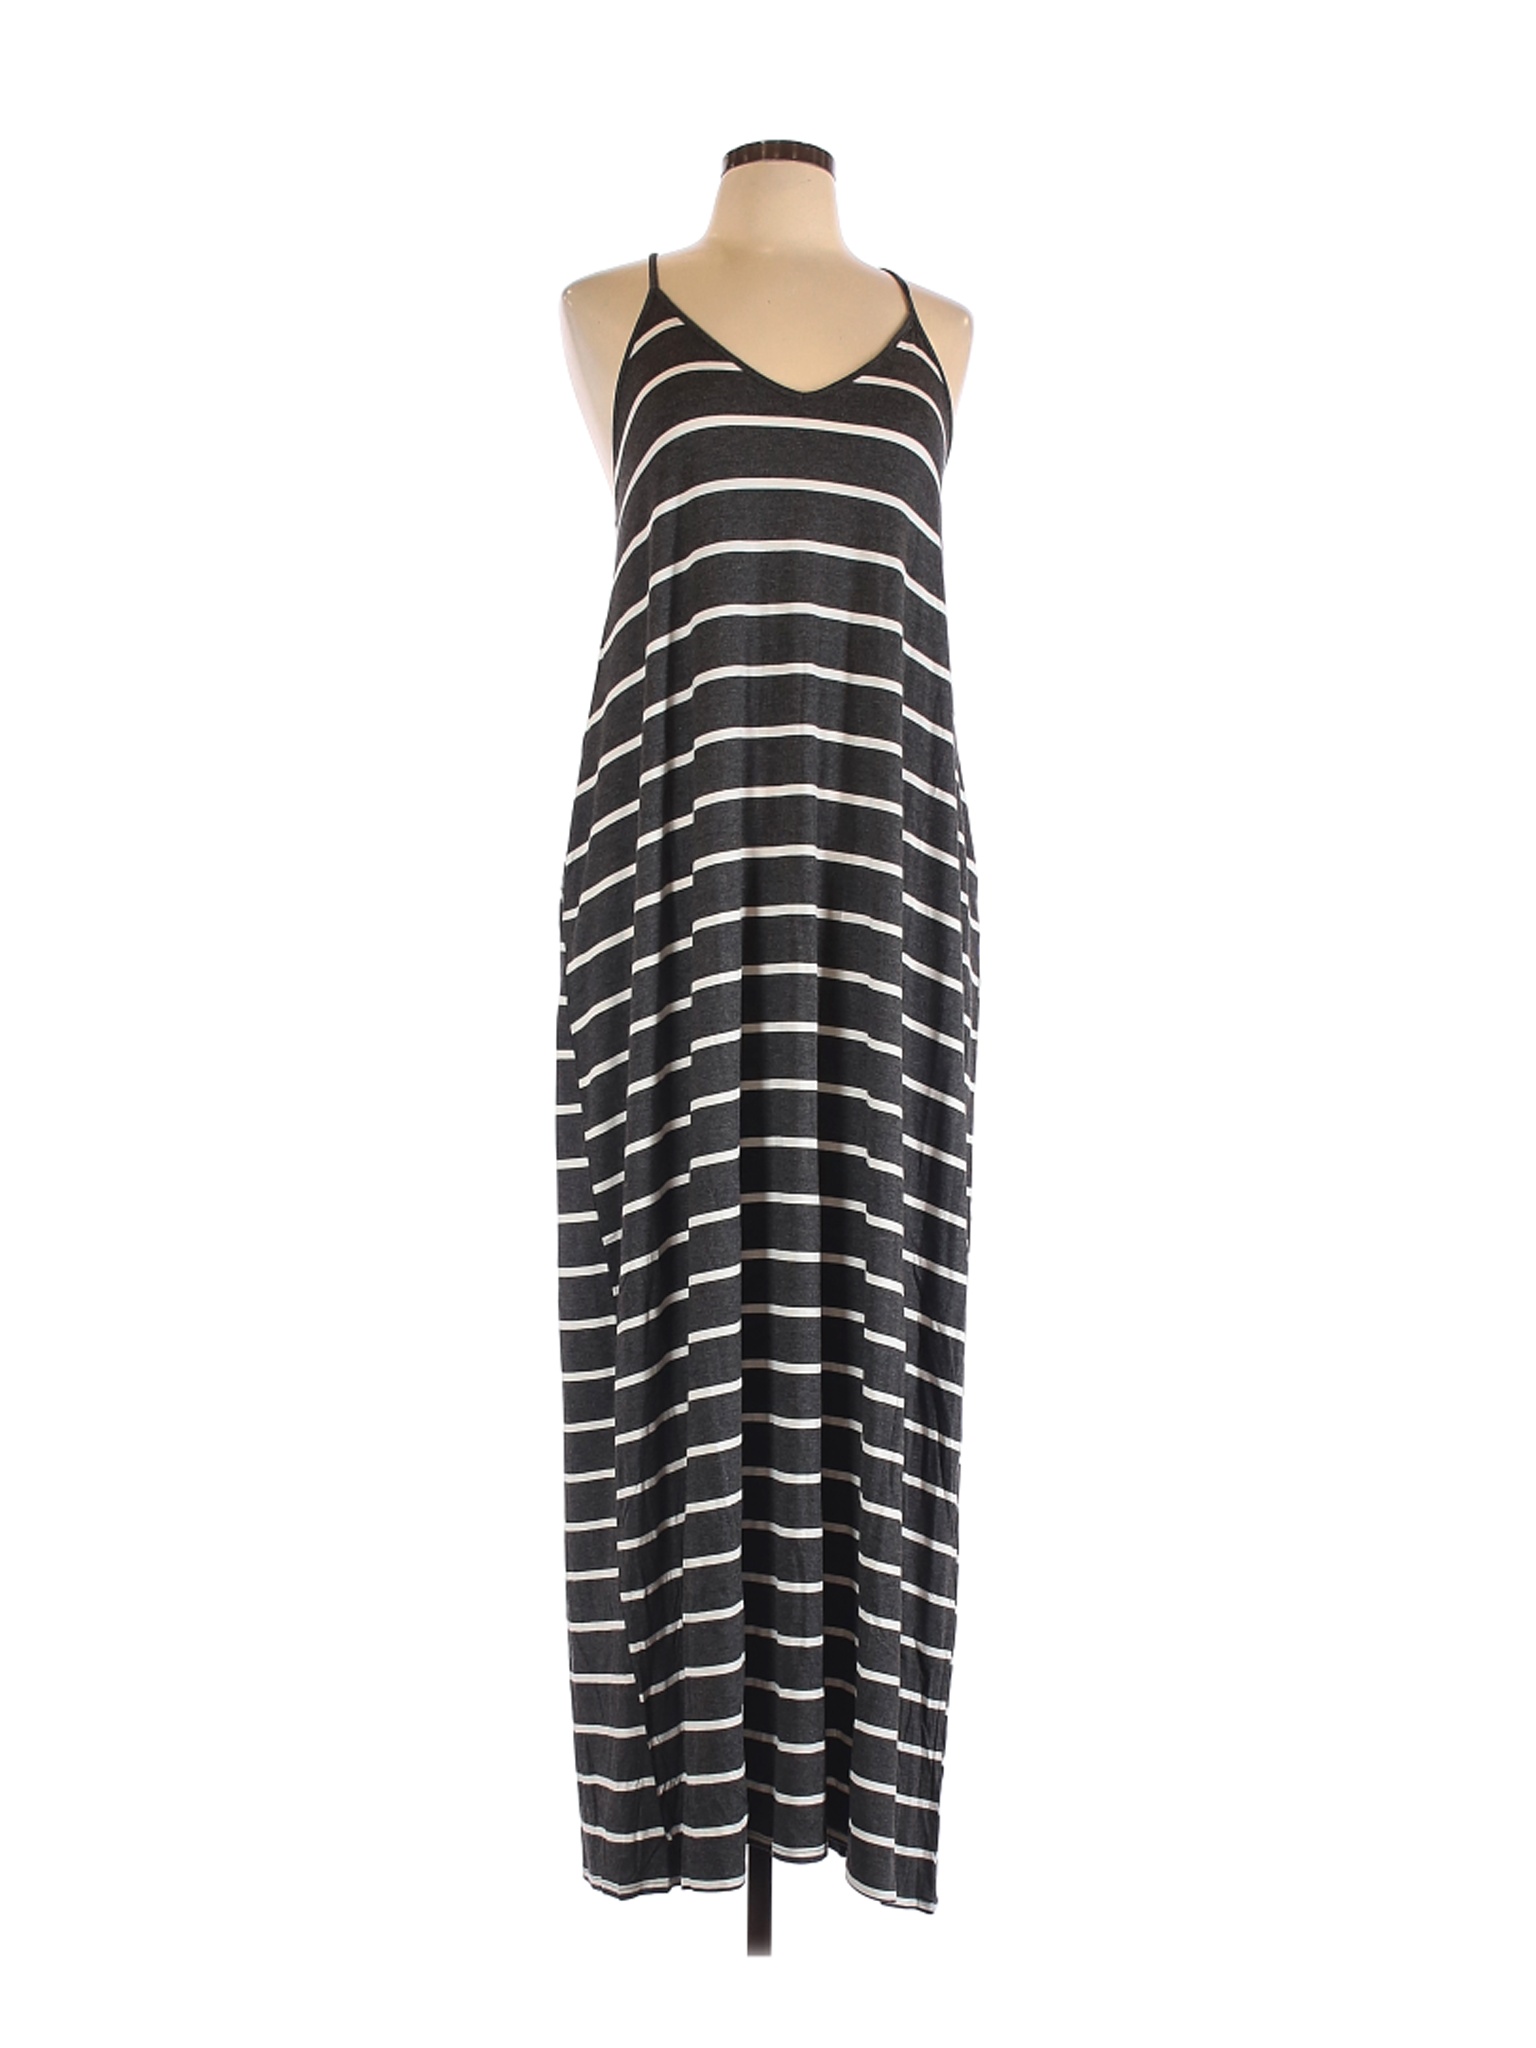 Zenana Premium Women Gray Casual Dress L | eBay